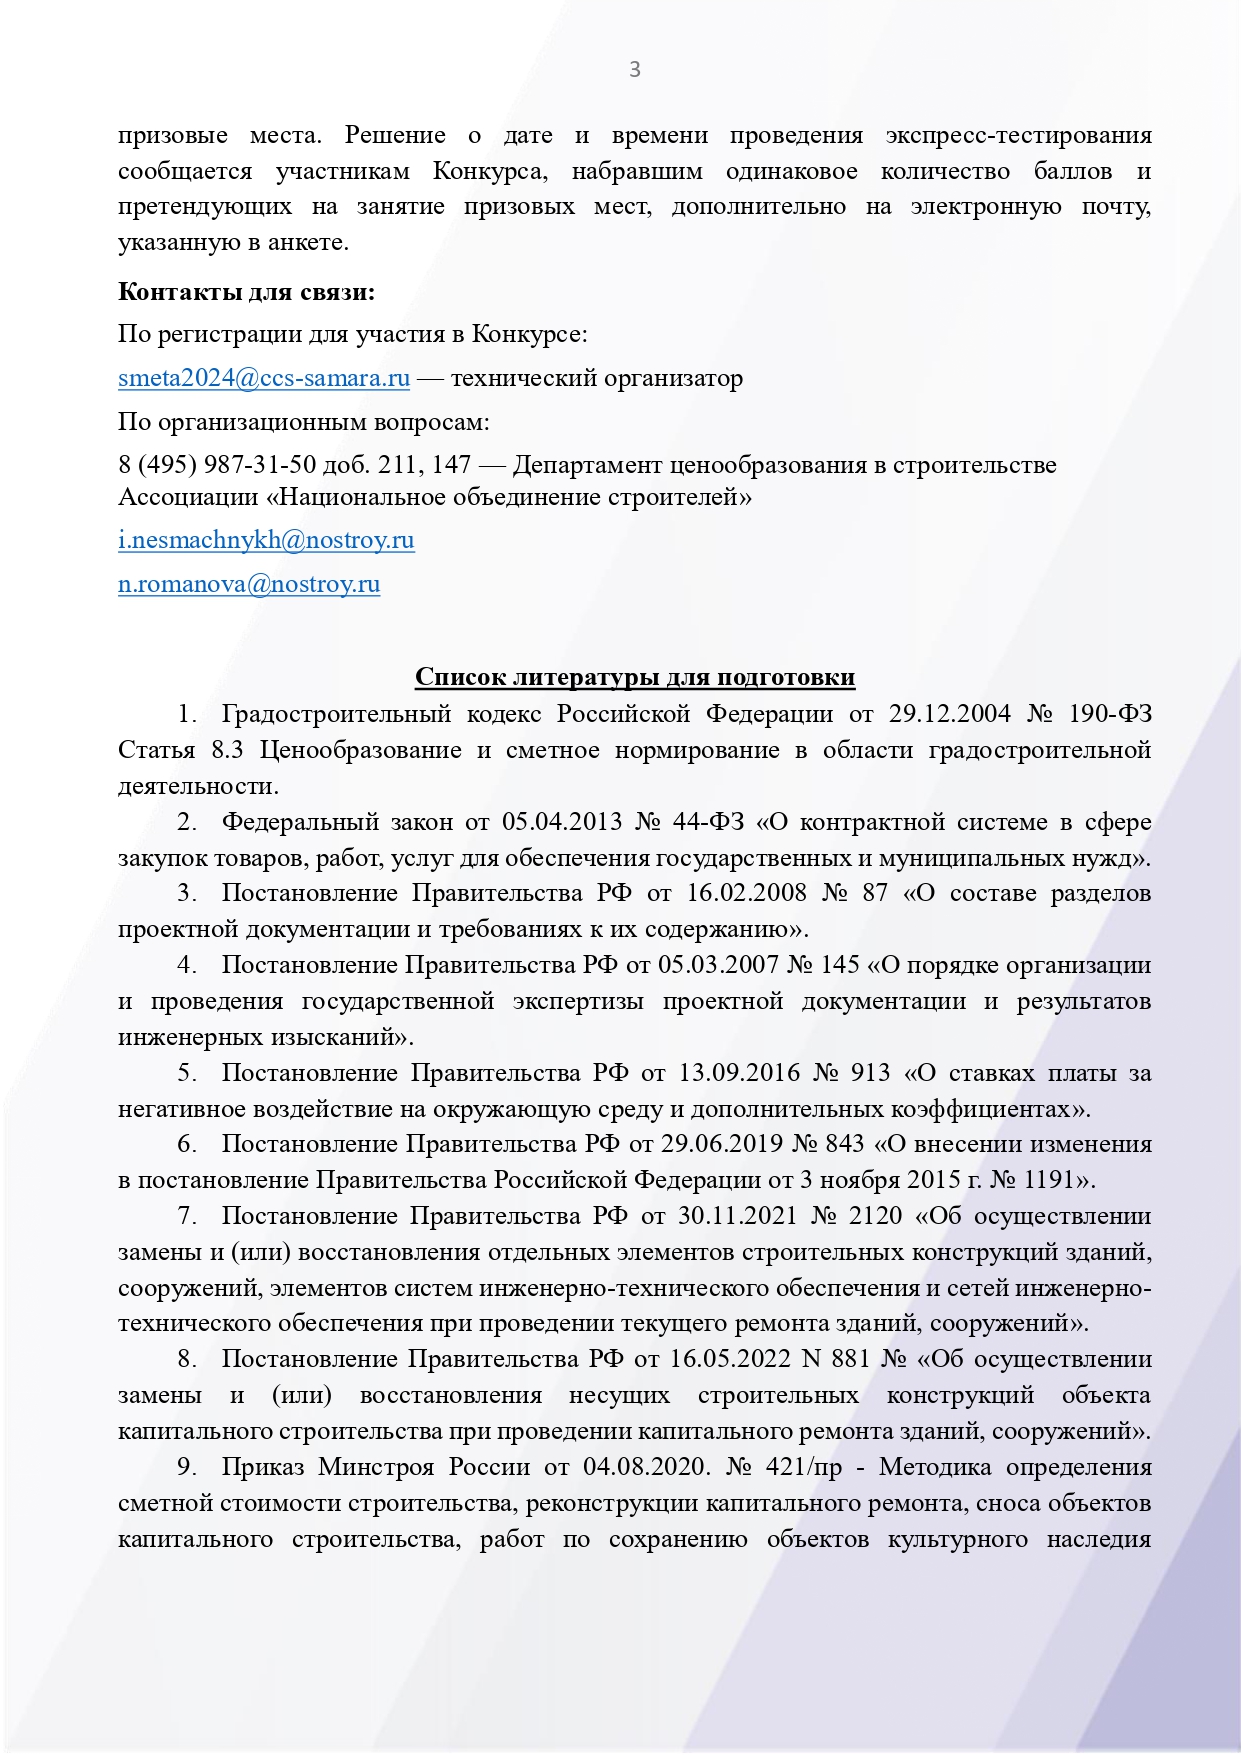 informaciya_po_konkursu_page-0003.jpg